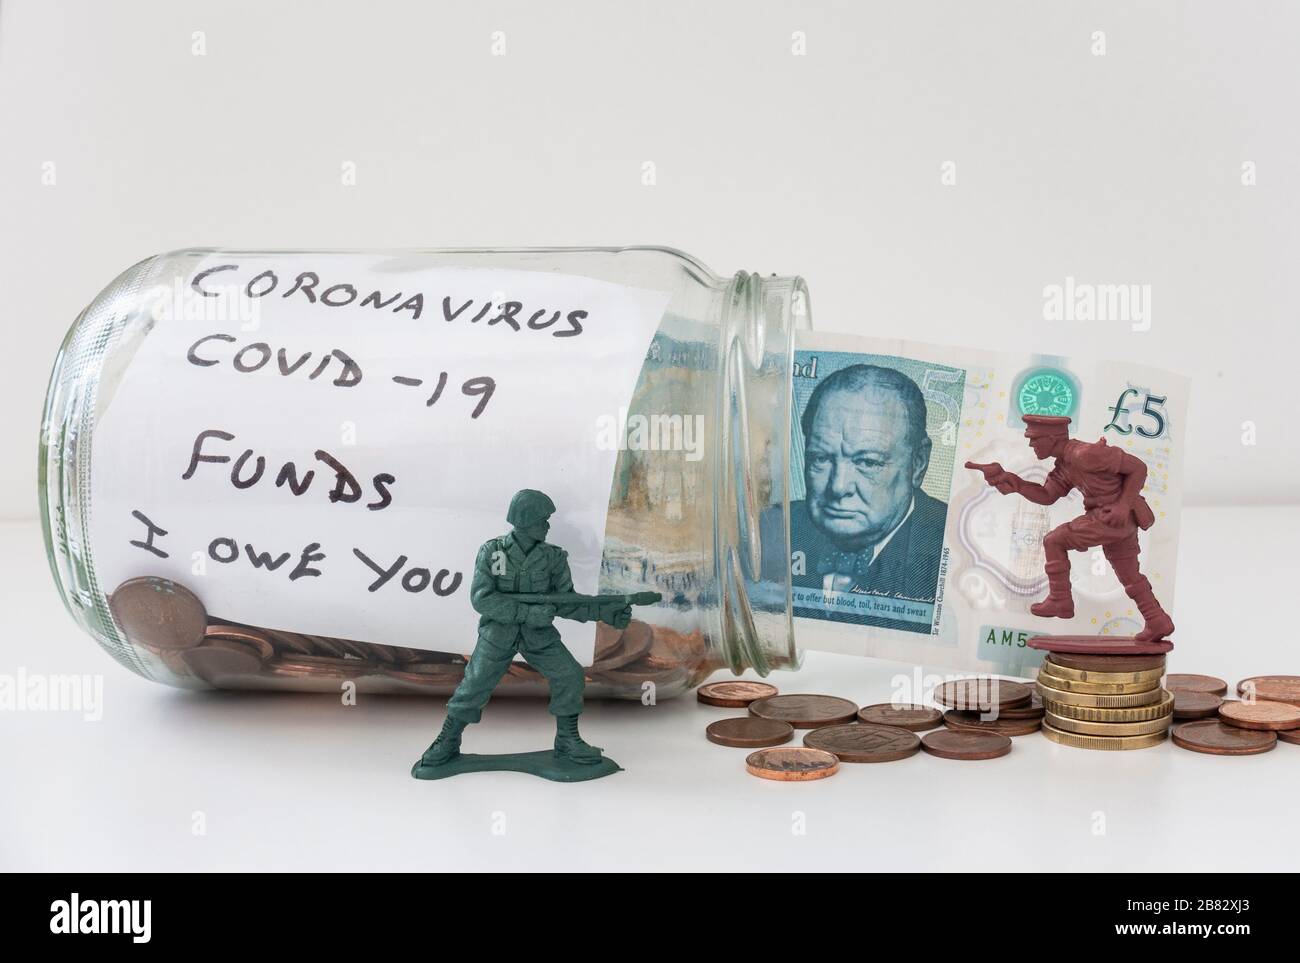 Jar of Coins, Winston Churchill auf fünf Pfund Note, Coronavirus Funds, Fighting Coronavirus, Savings, Debt... Konzept Stockfoto